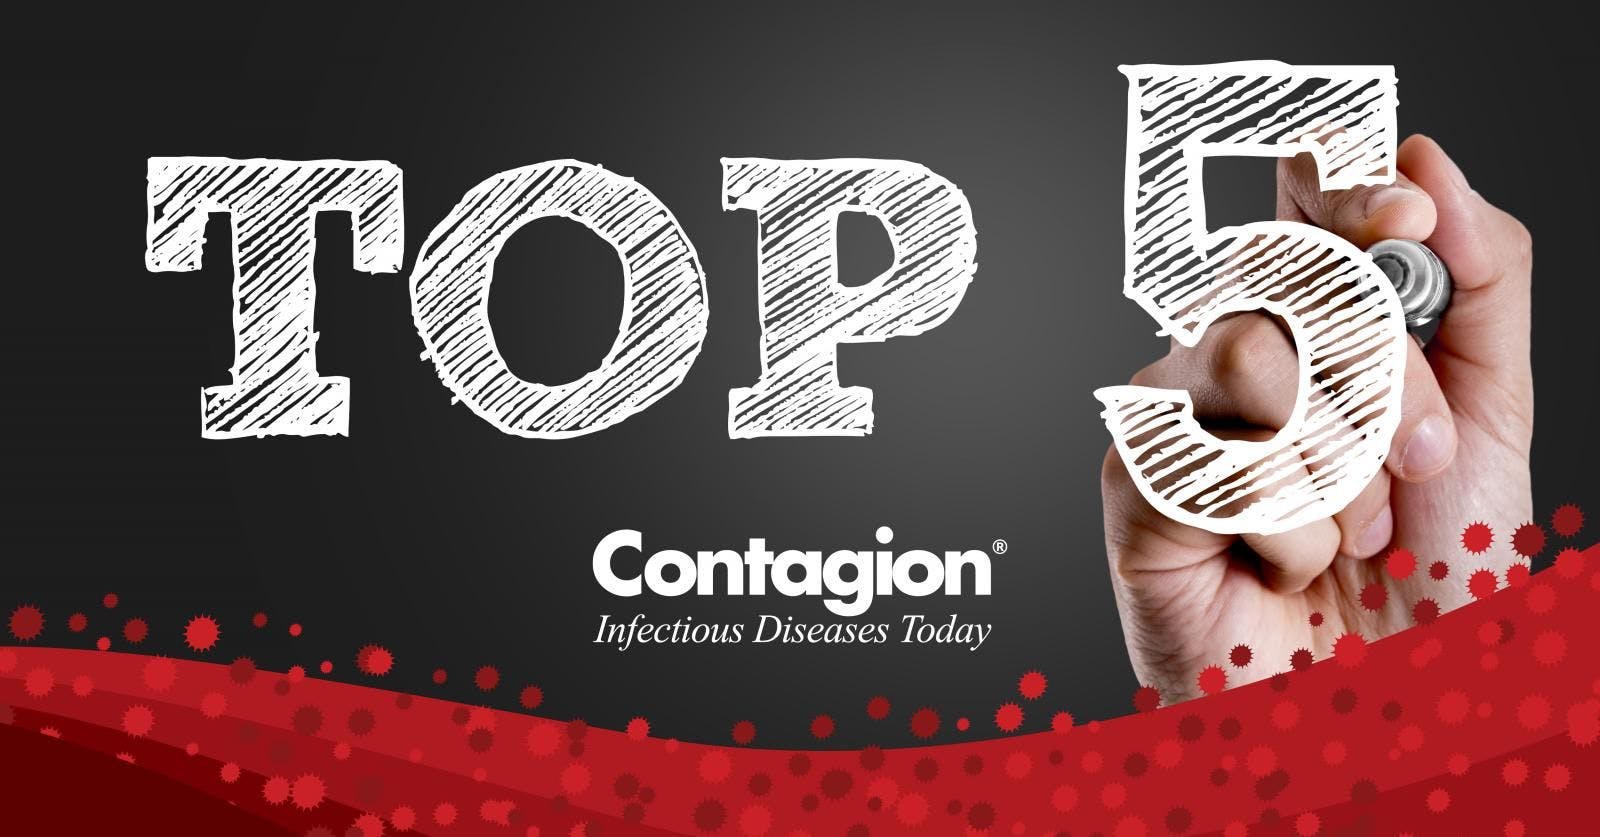 Top Infectious Disease News of the Week&mdash;December 15, 2019